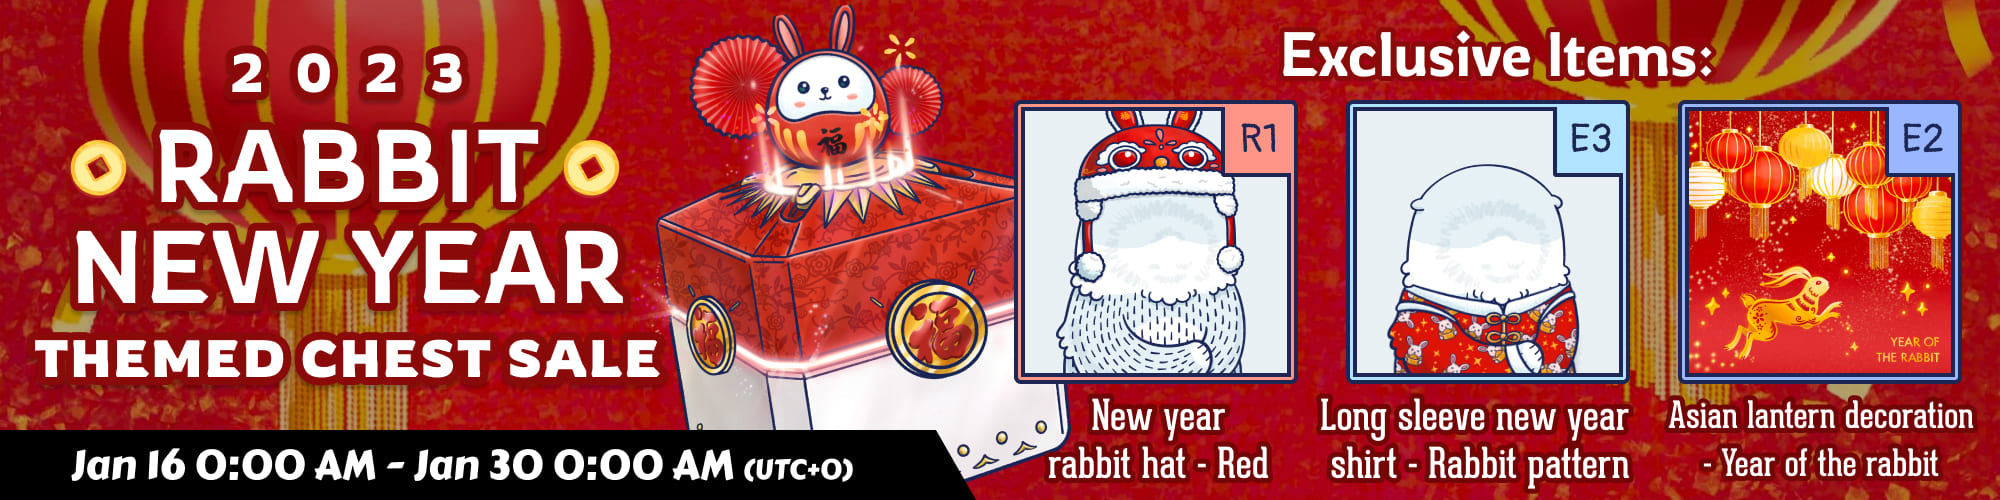 Rabbit New Year Chest Sale